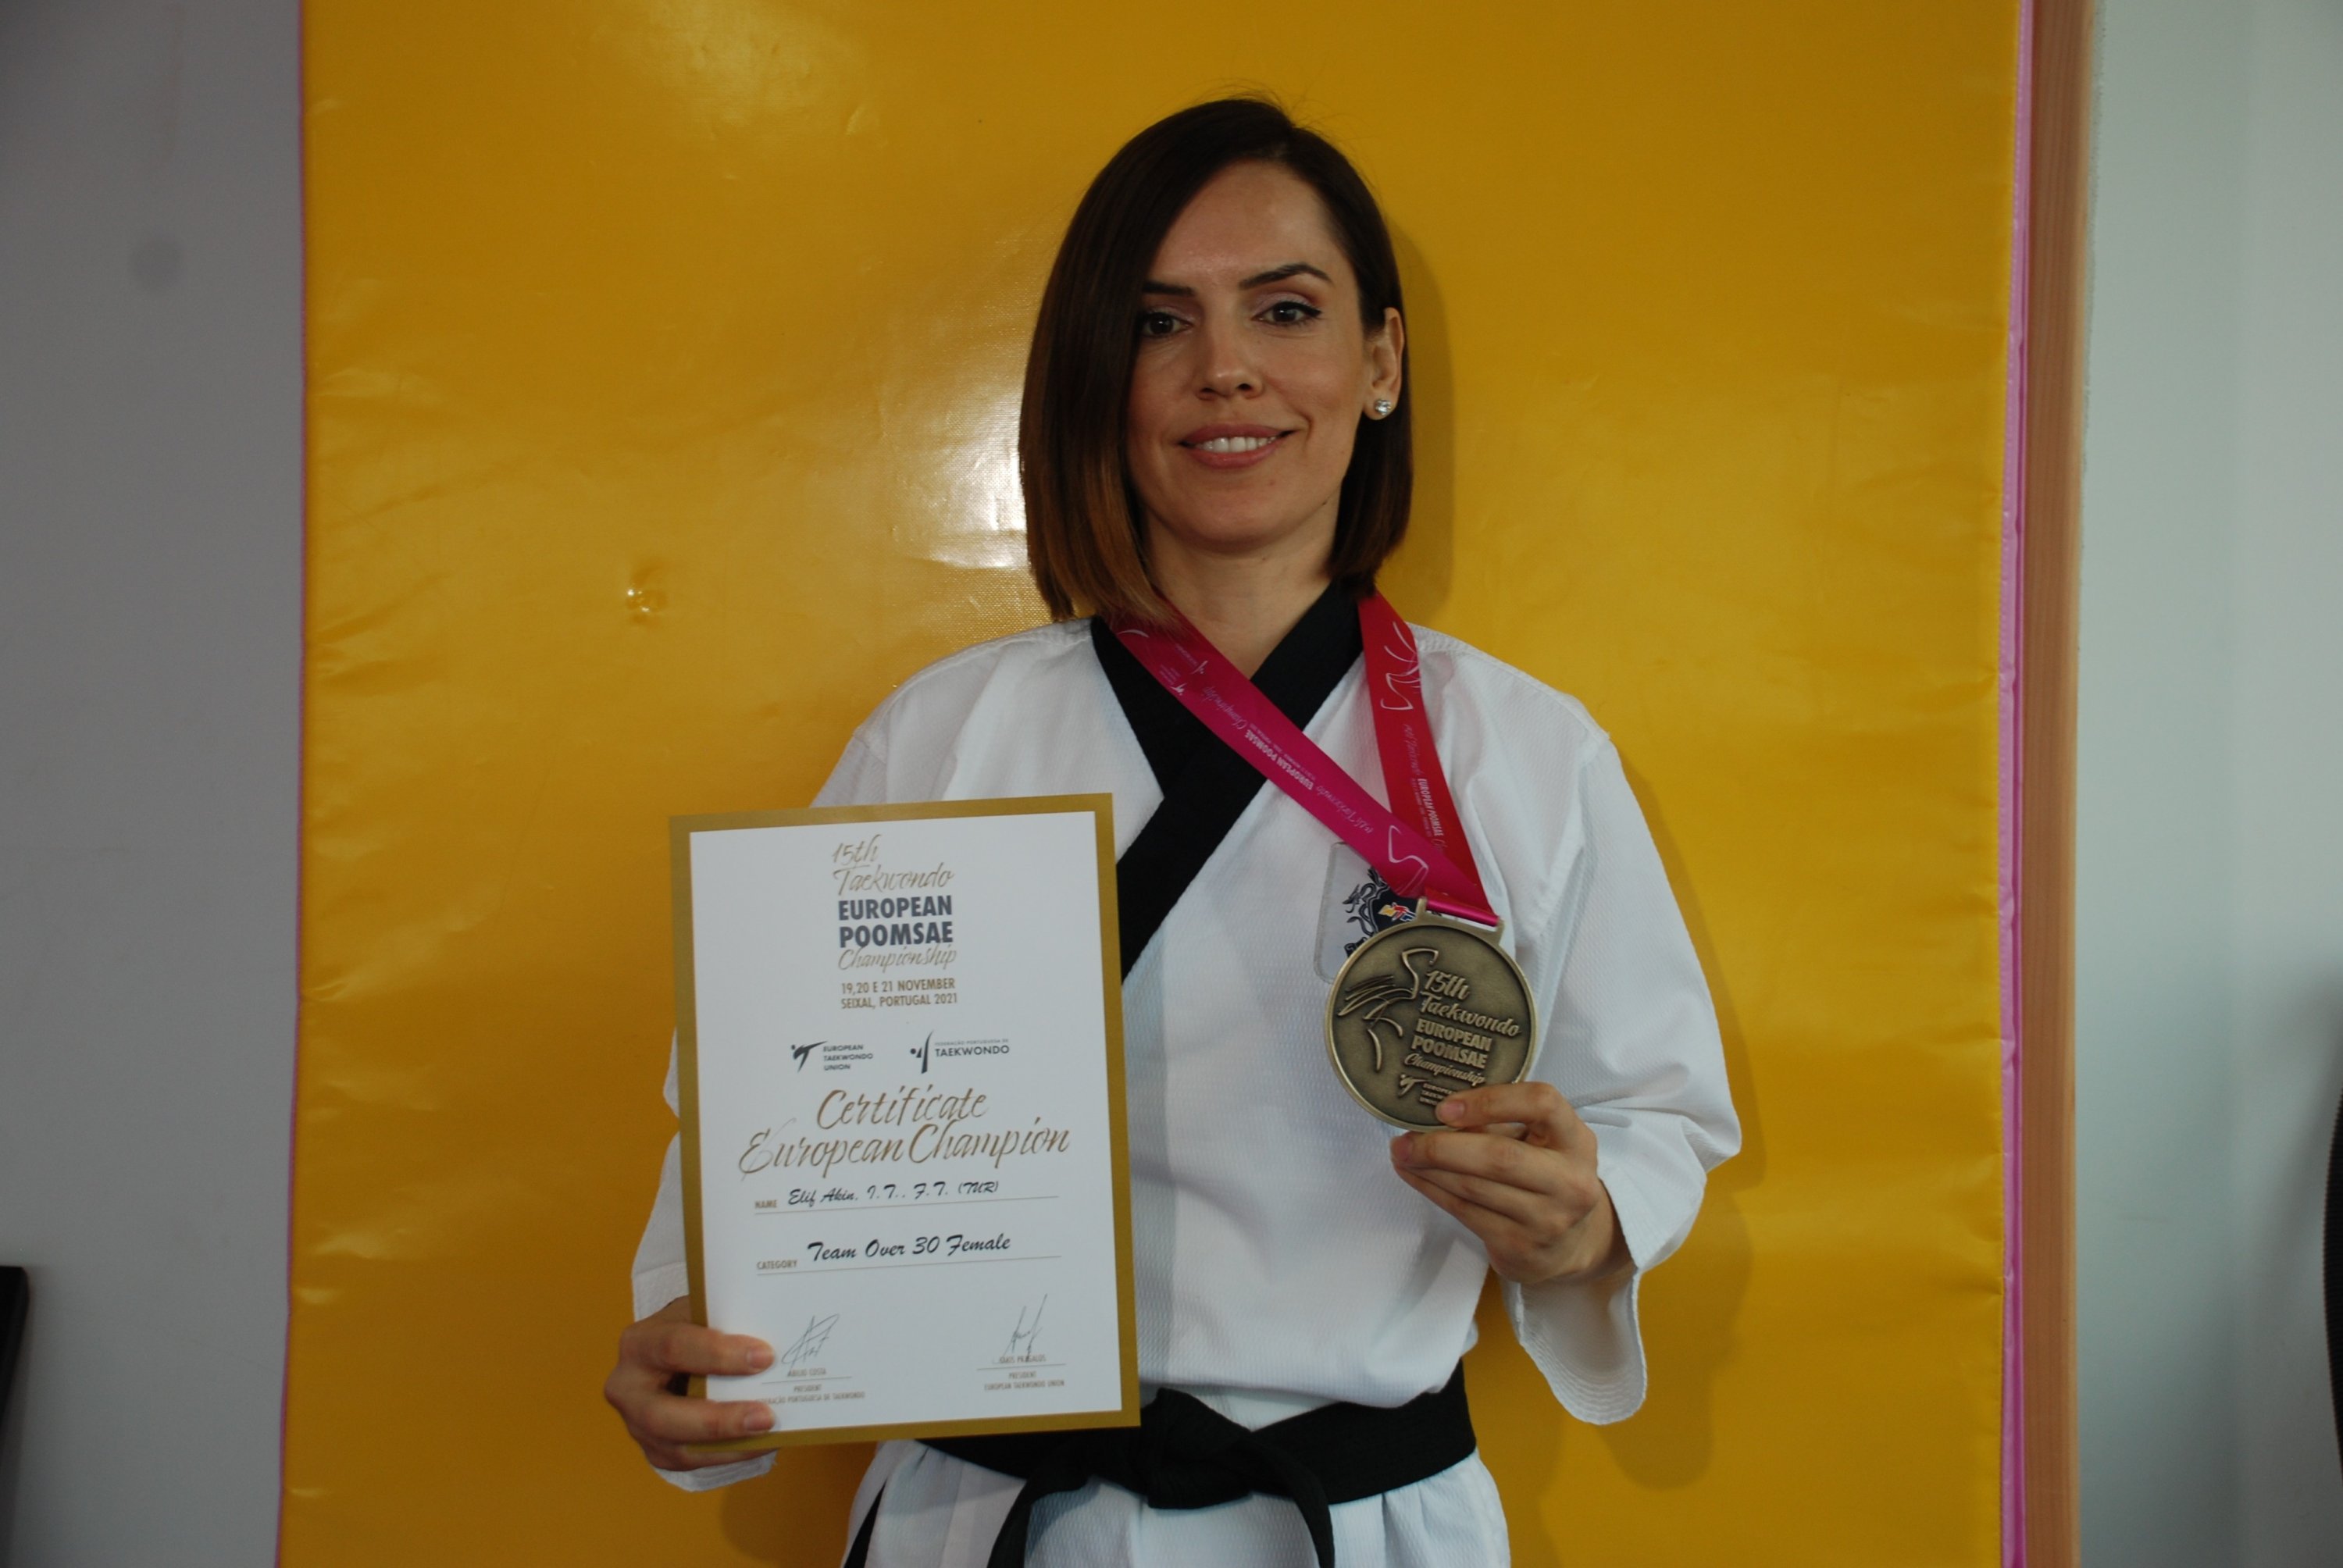 Physical education teacher and taekwondo champion Elif Soytürk Akın with her medal and certificate from the European Taekwondo Pumse Championships she won, Izmir, Turkey, Nov. 24, 2021 (IHA Photo) 